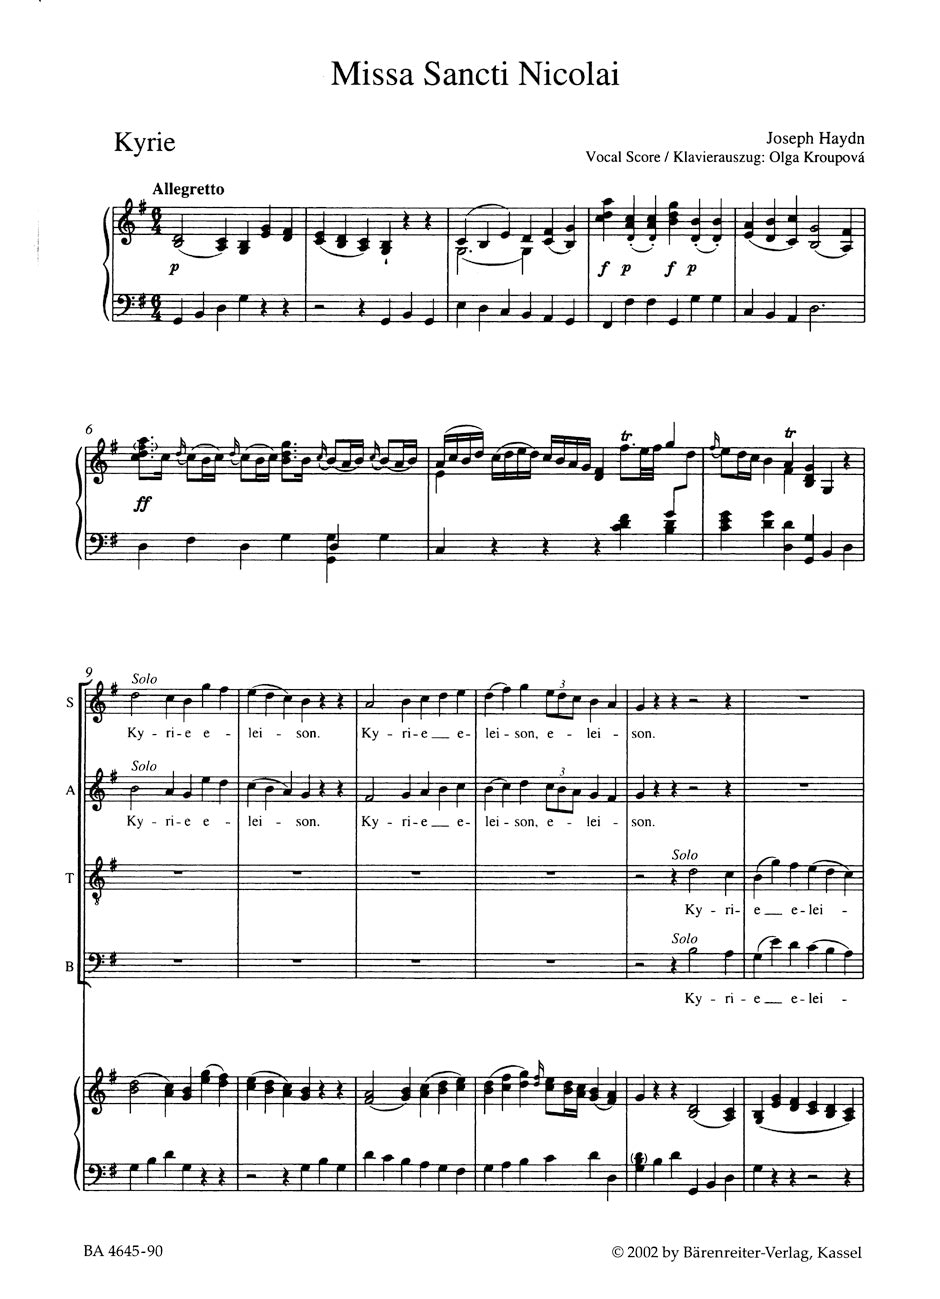 Haydn Missa Sancti Nicolai Hob. XXII:6 "Nicolai Mass"